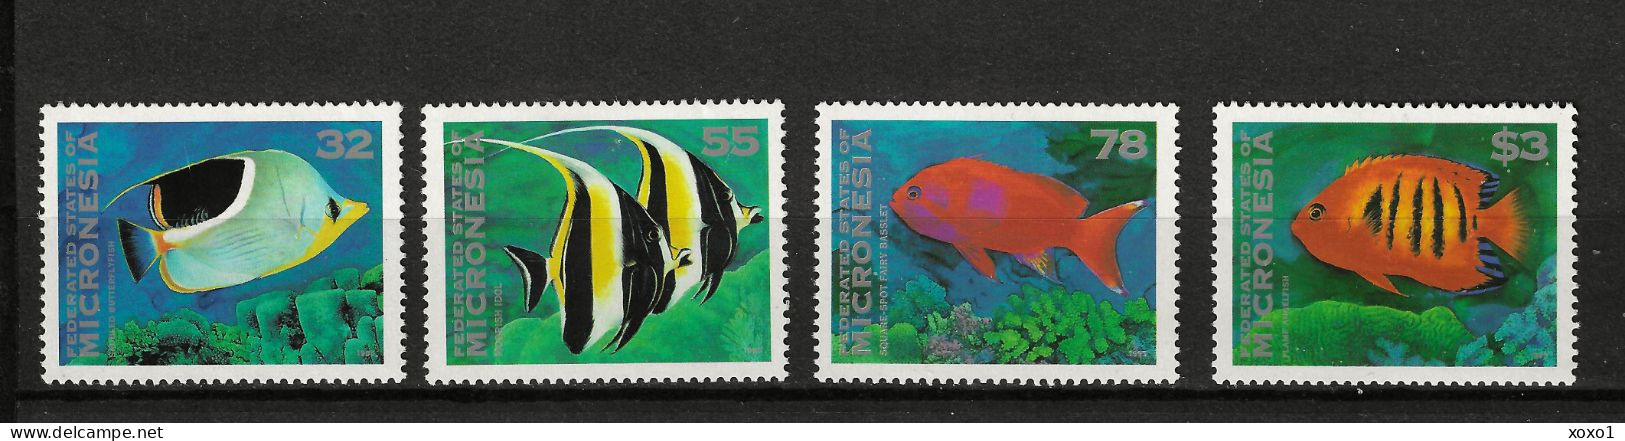 Micronesia 1995 MiNr. 418 - 421 Mikronesien Marine Life Fishes 4v MNH** 12.00 € - Micronesia